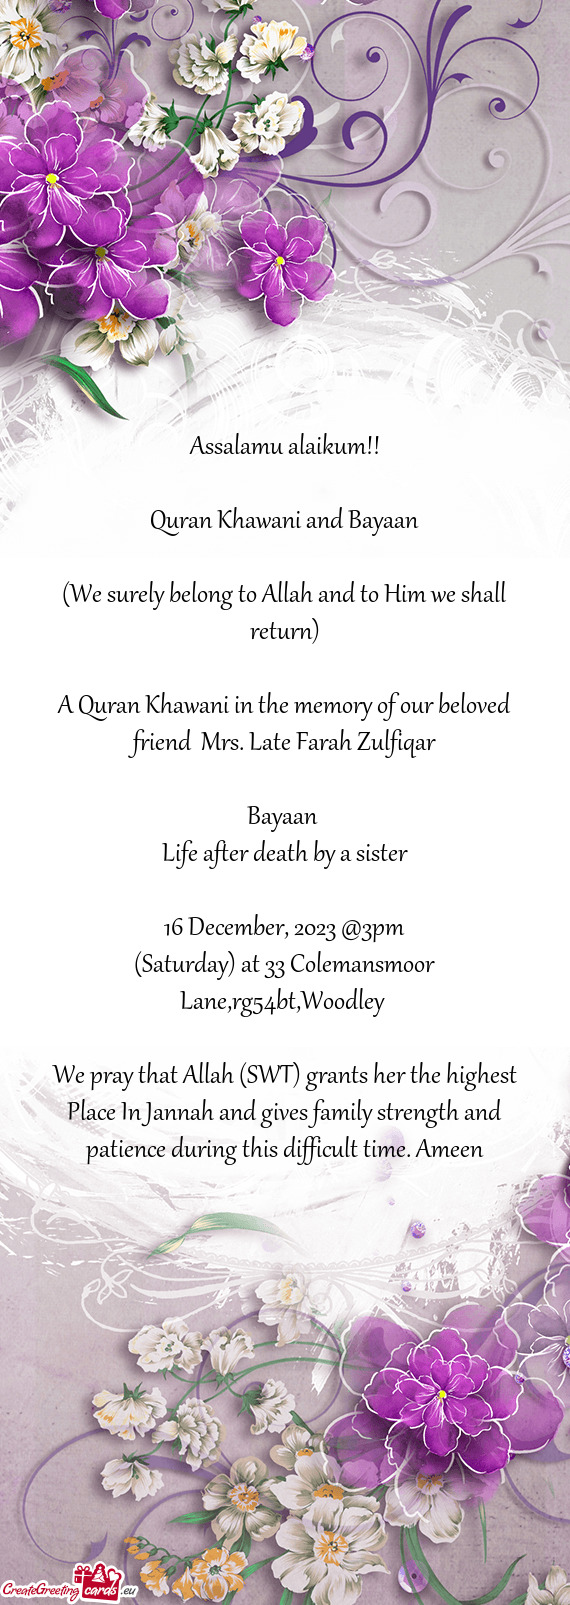 A Quran Khawani in the memory of our beloved friend Mrs. Late Farah Zulfiqar